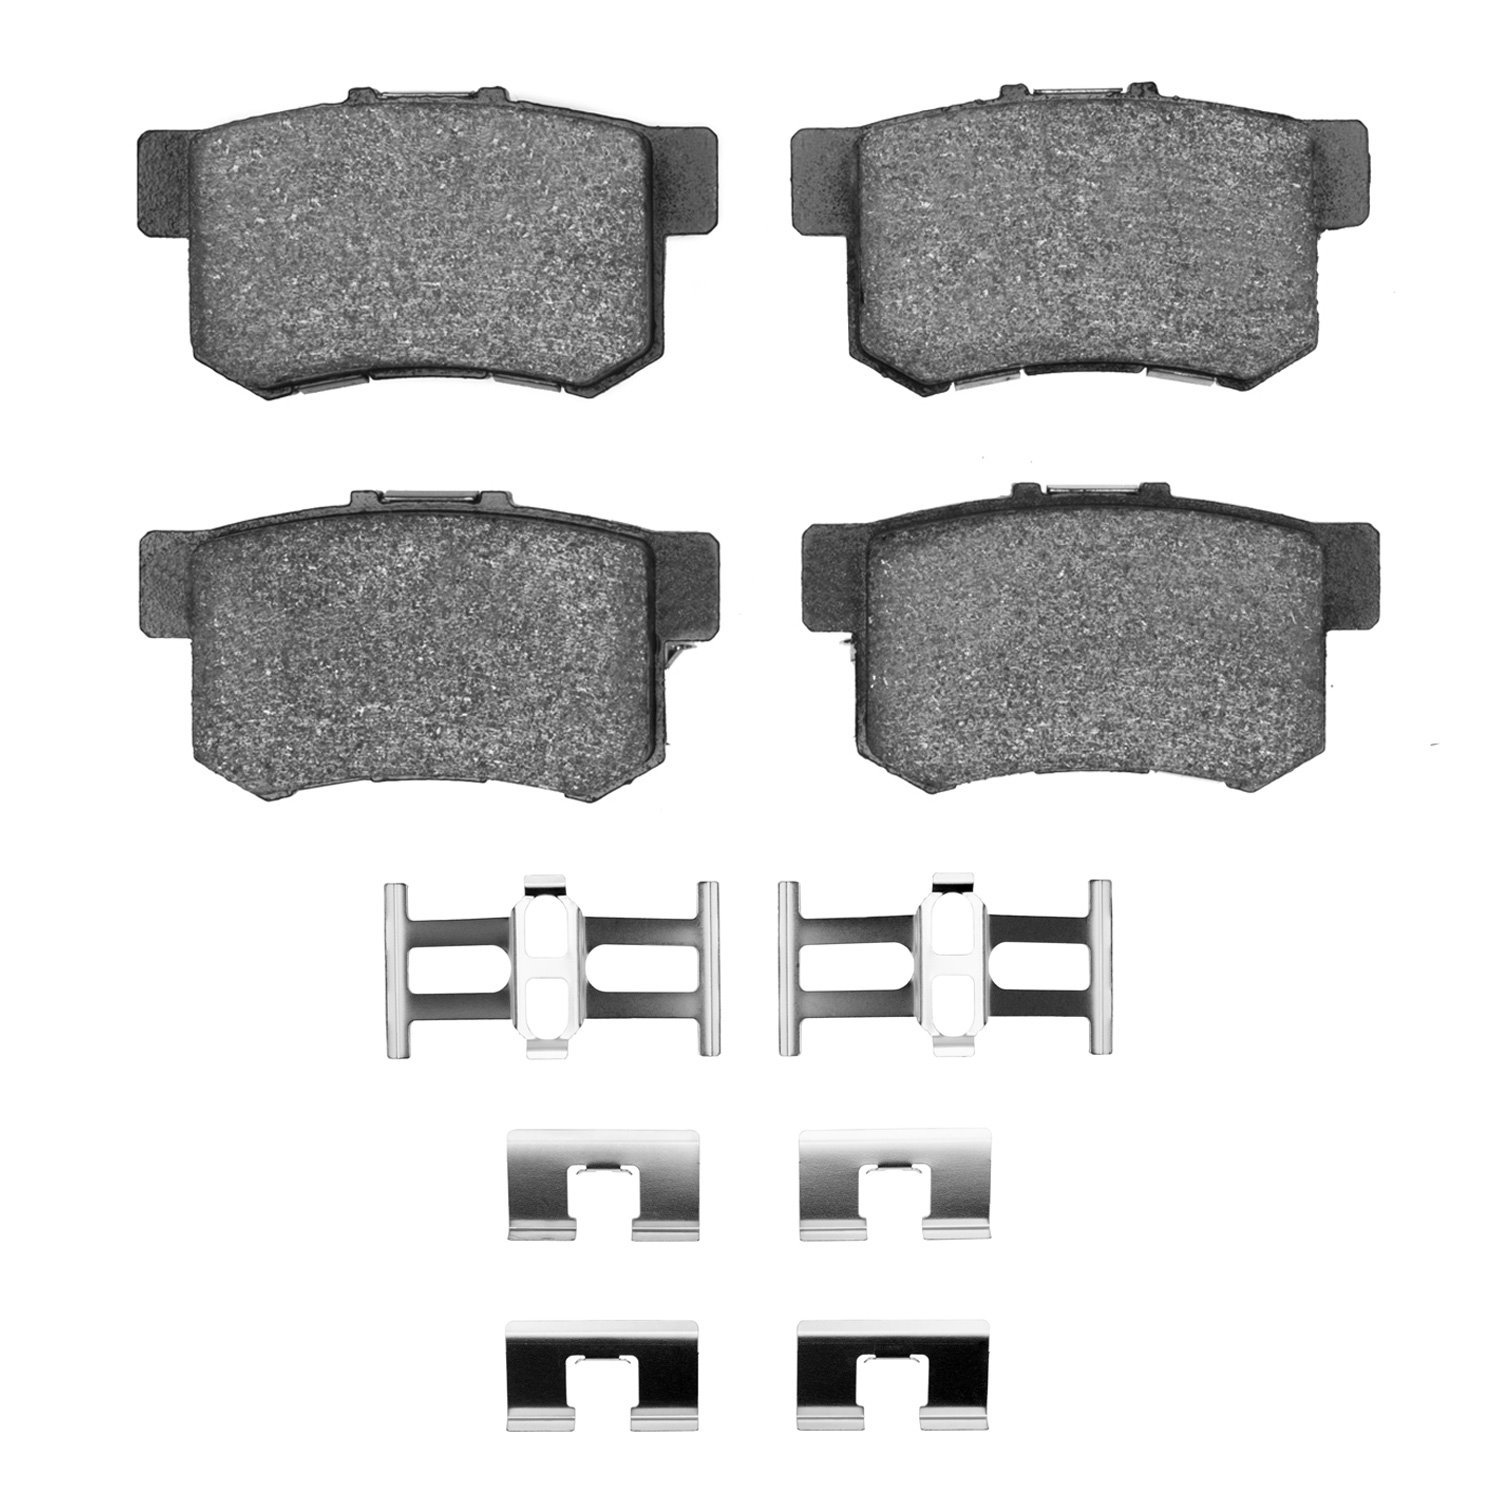 1310-0537-01 3000-Series Ceramic Brake Pads & Hardware Kit, Fits Select Multiple Makes/Models, Position: Rear